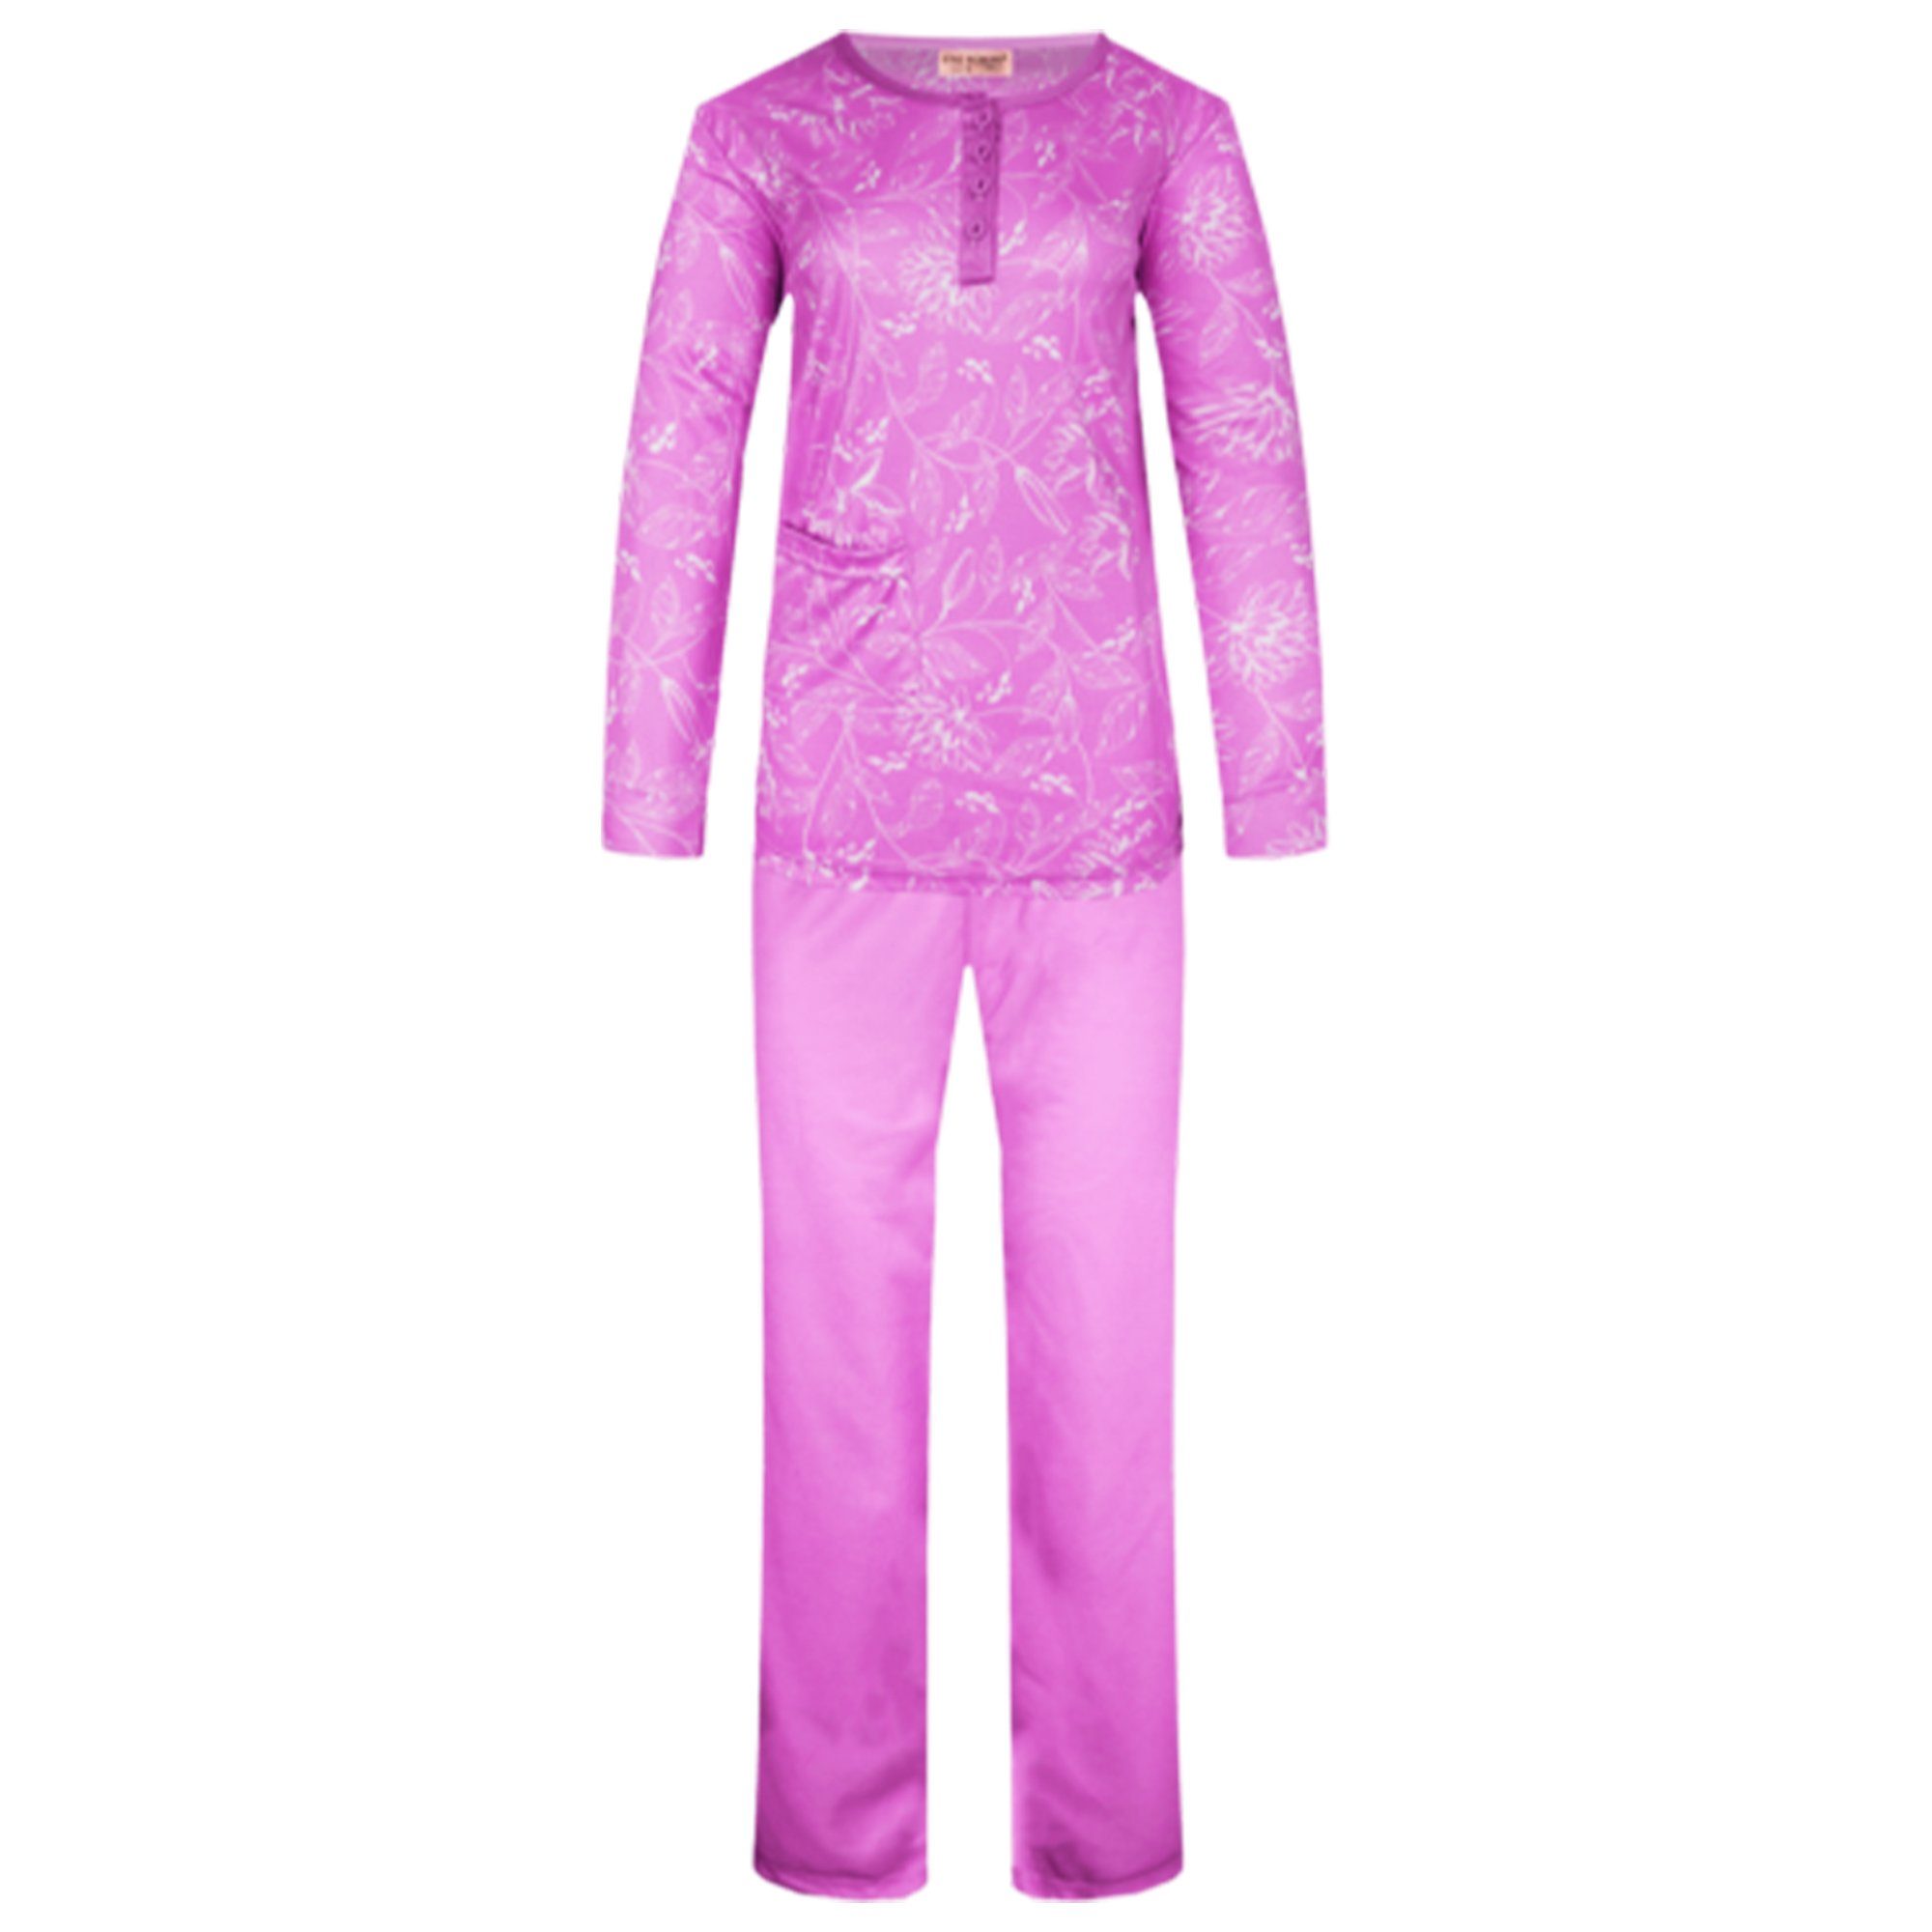 TEXEMP Pyjama Damen Pyjama Schlafanzug Set Baumwolle Langarm Nachtwäsche Lang (Set) 90% Baumwolle Rosa